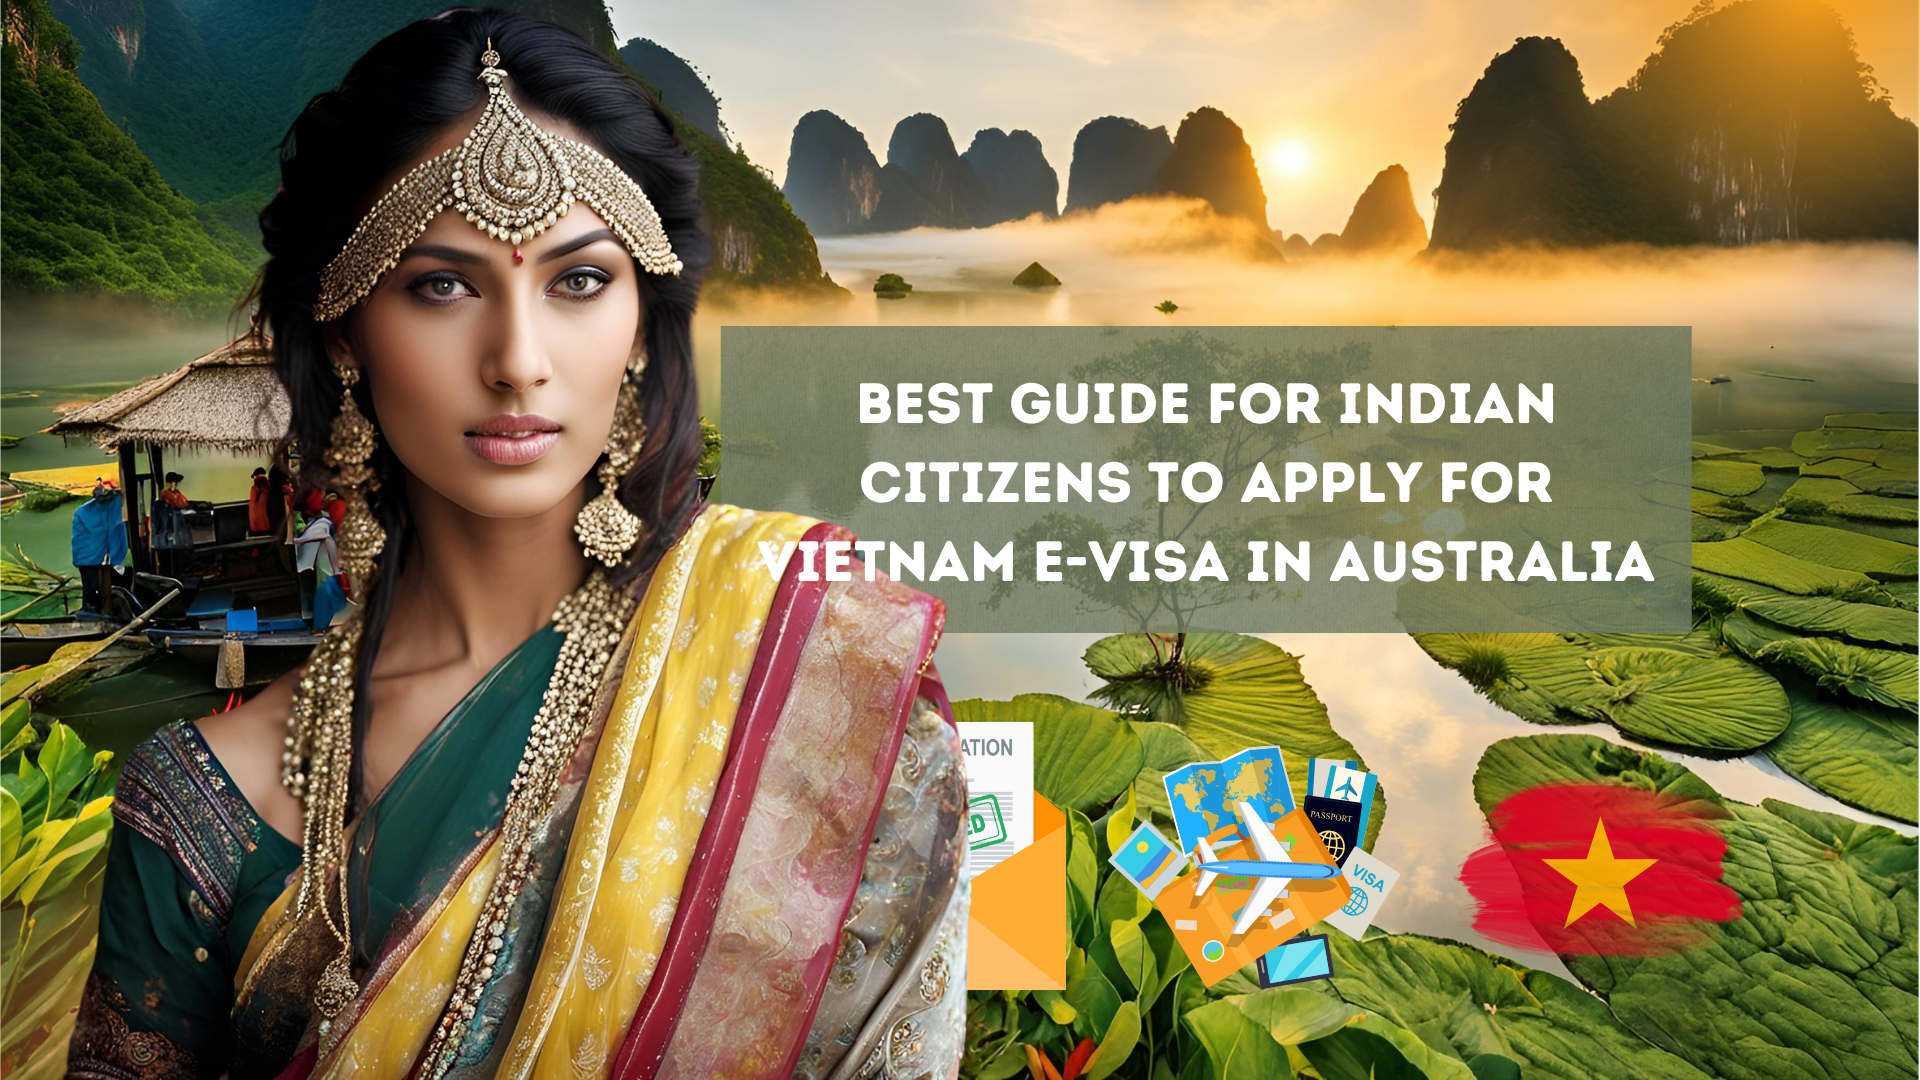 Best Guide for Indian Citizens to Apply for Vietnam E-Visa in Australia